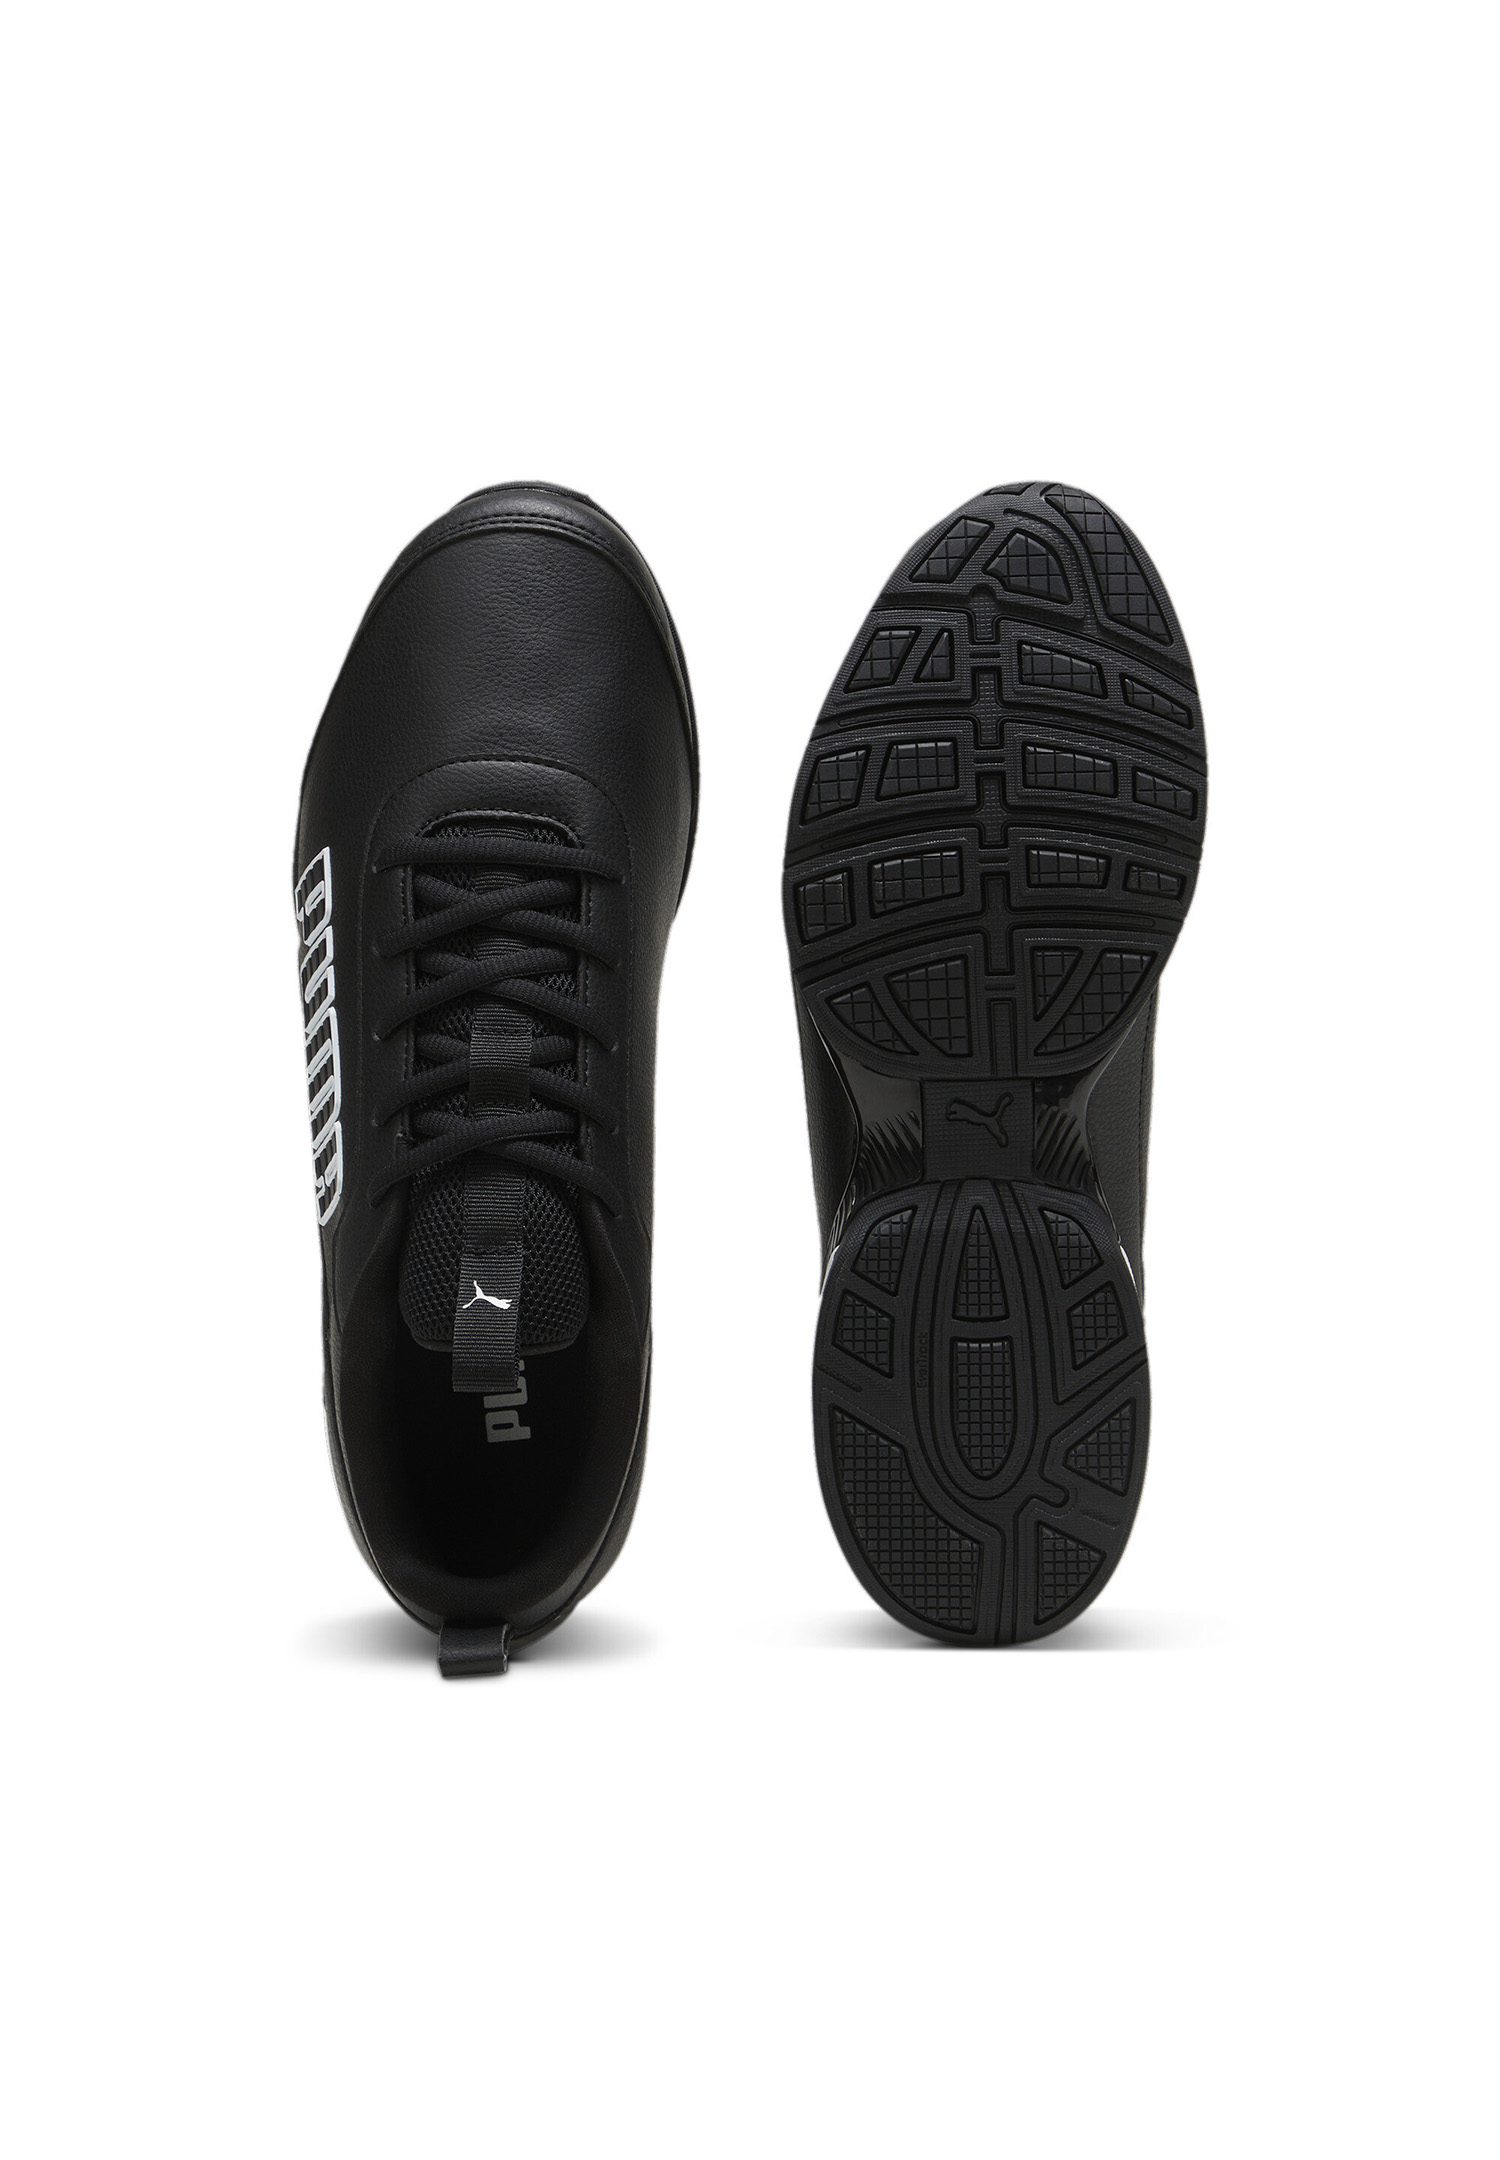 Puma Equate SL 2 Laufschuhe Herren Sneaker Schuhe 310039 01 schwarz/weiß 